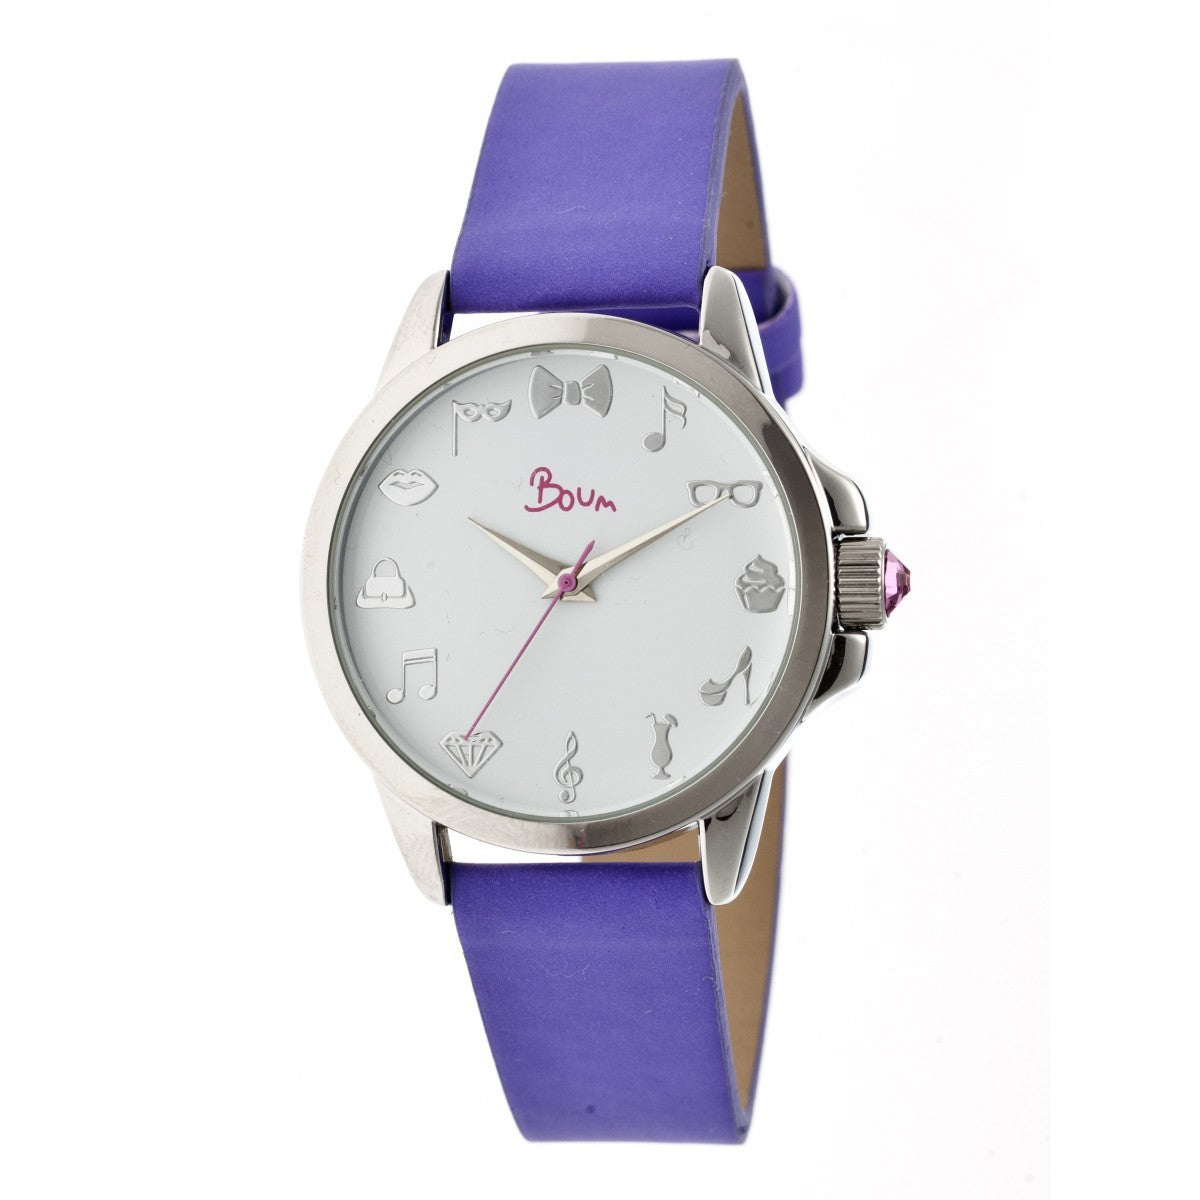 Boum Soigne Ladies Watch - Silver/Purple - BOUBM2902